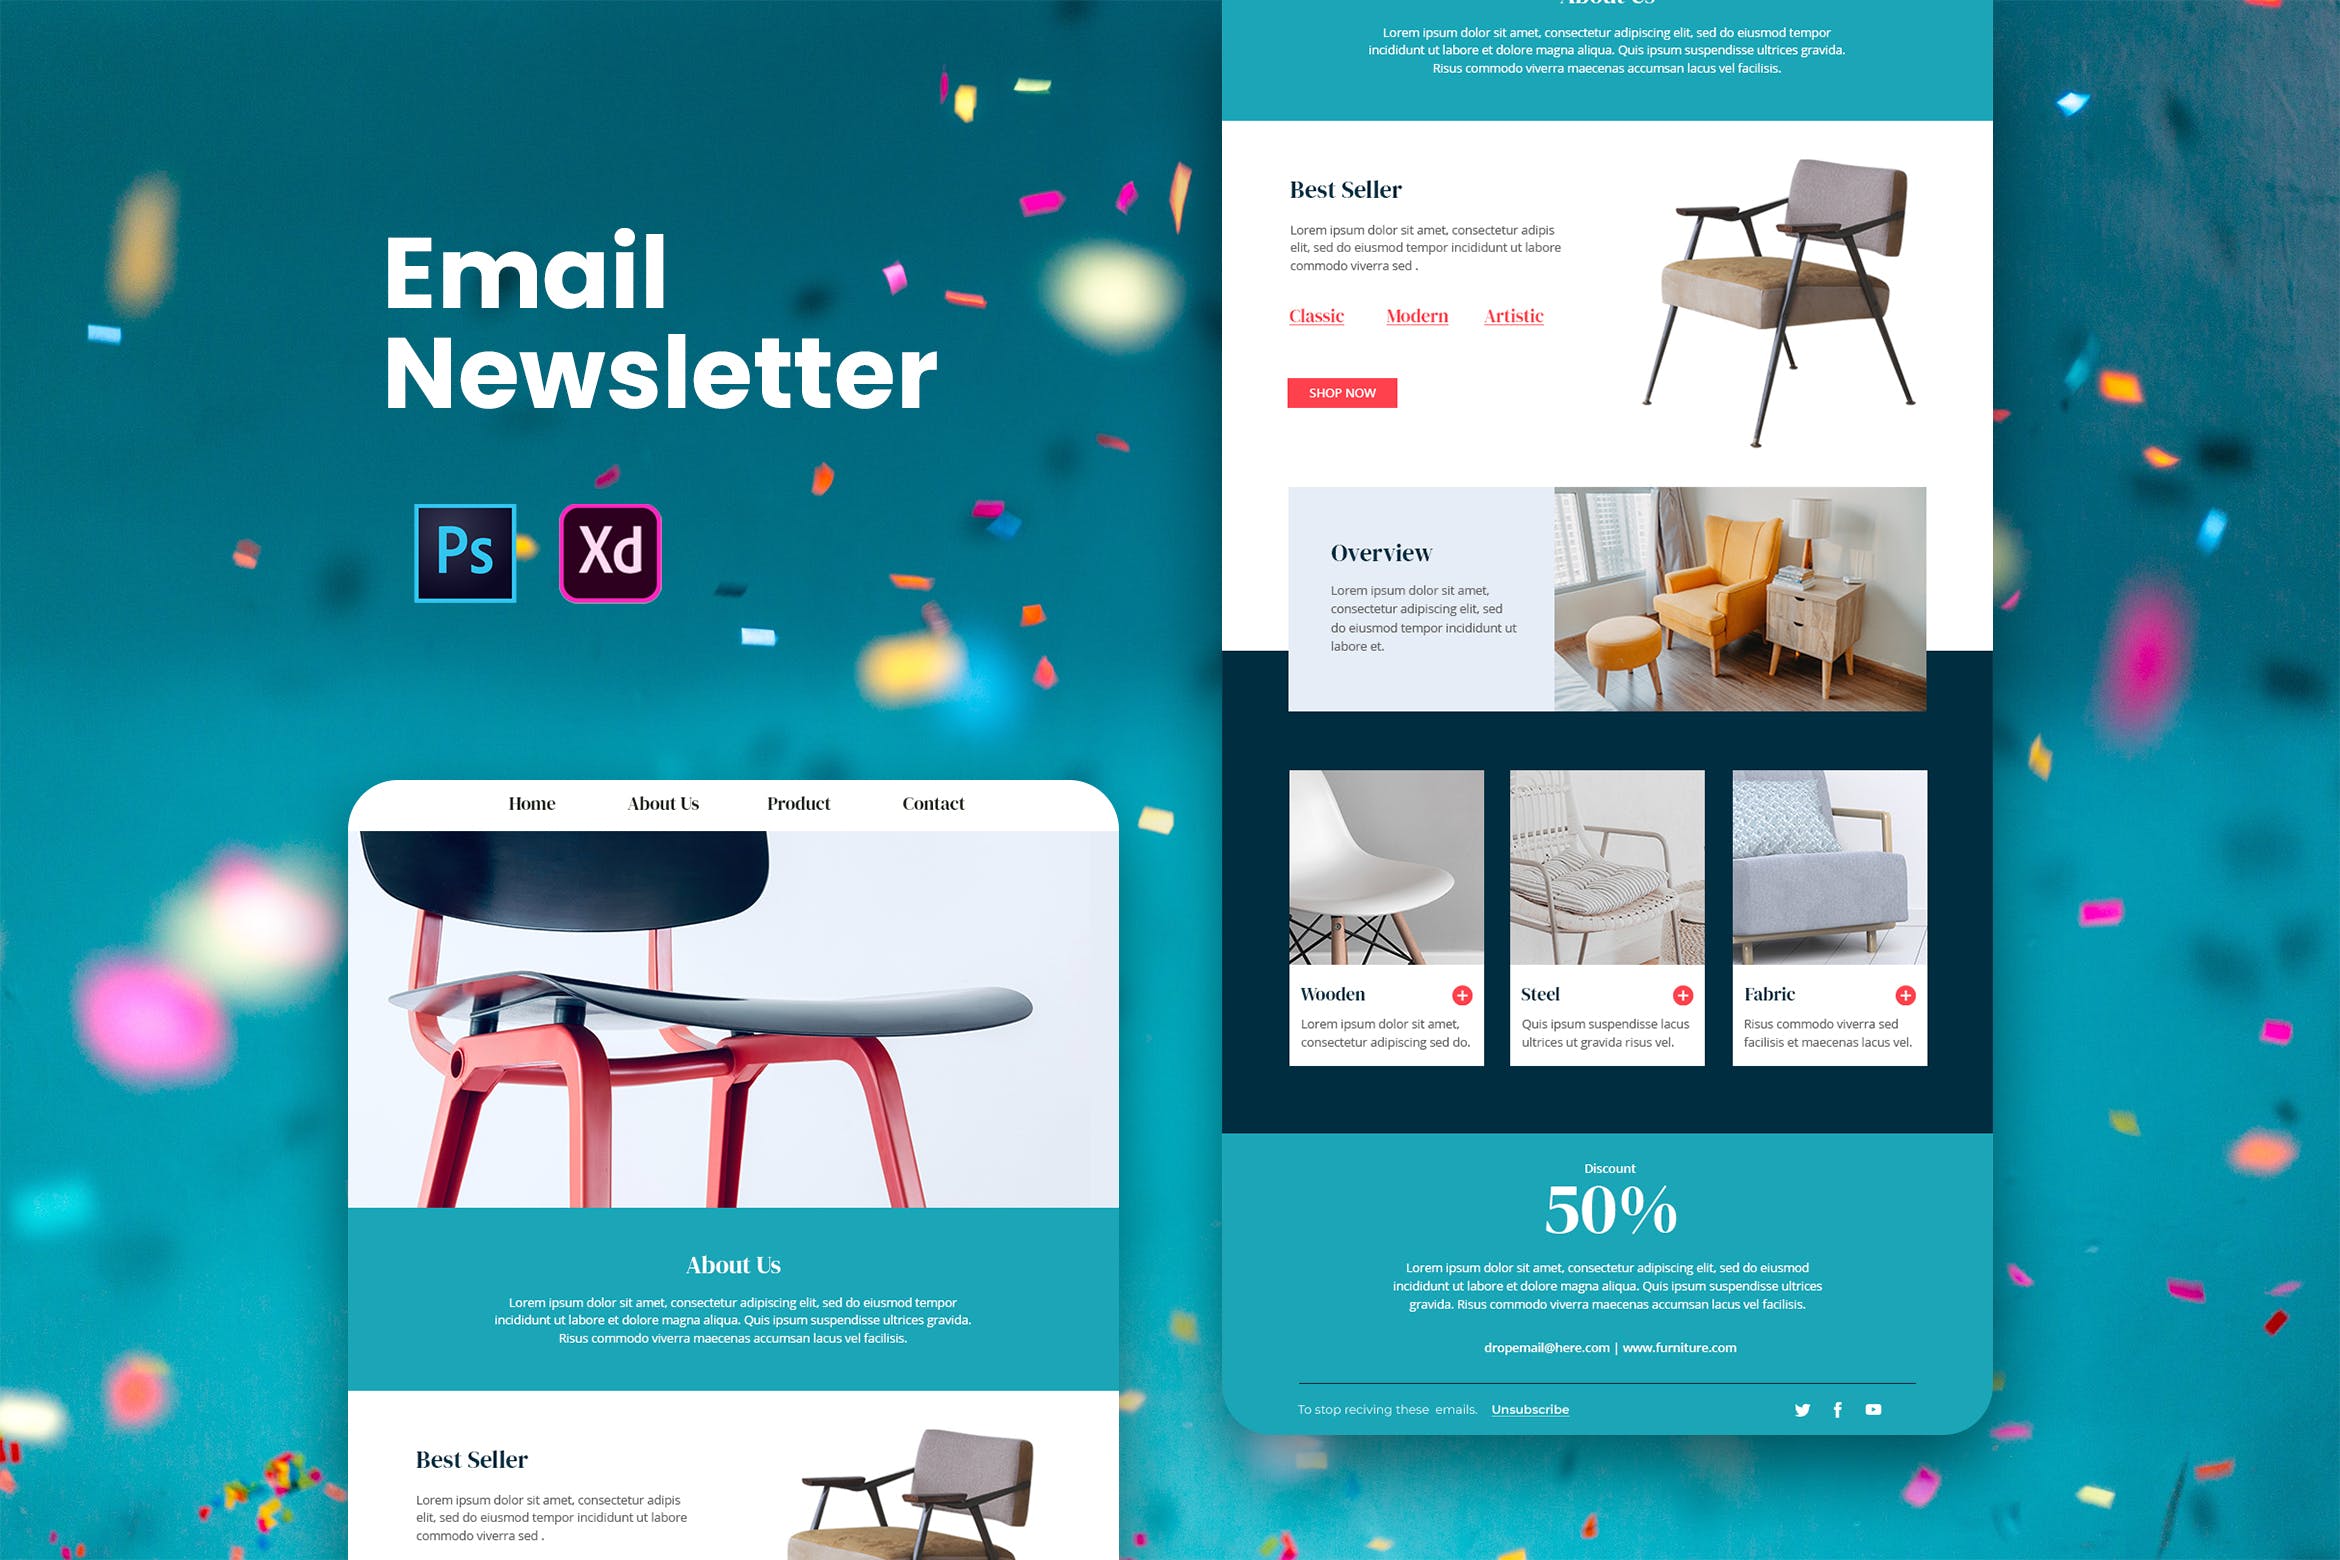 家具品牌推广EDM邮件模板16设计网精选 Furniture Email Newsletter插图